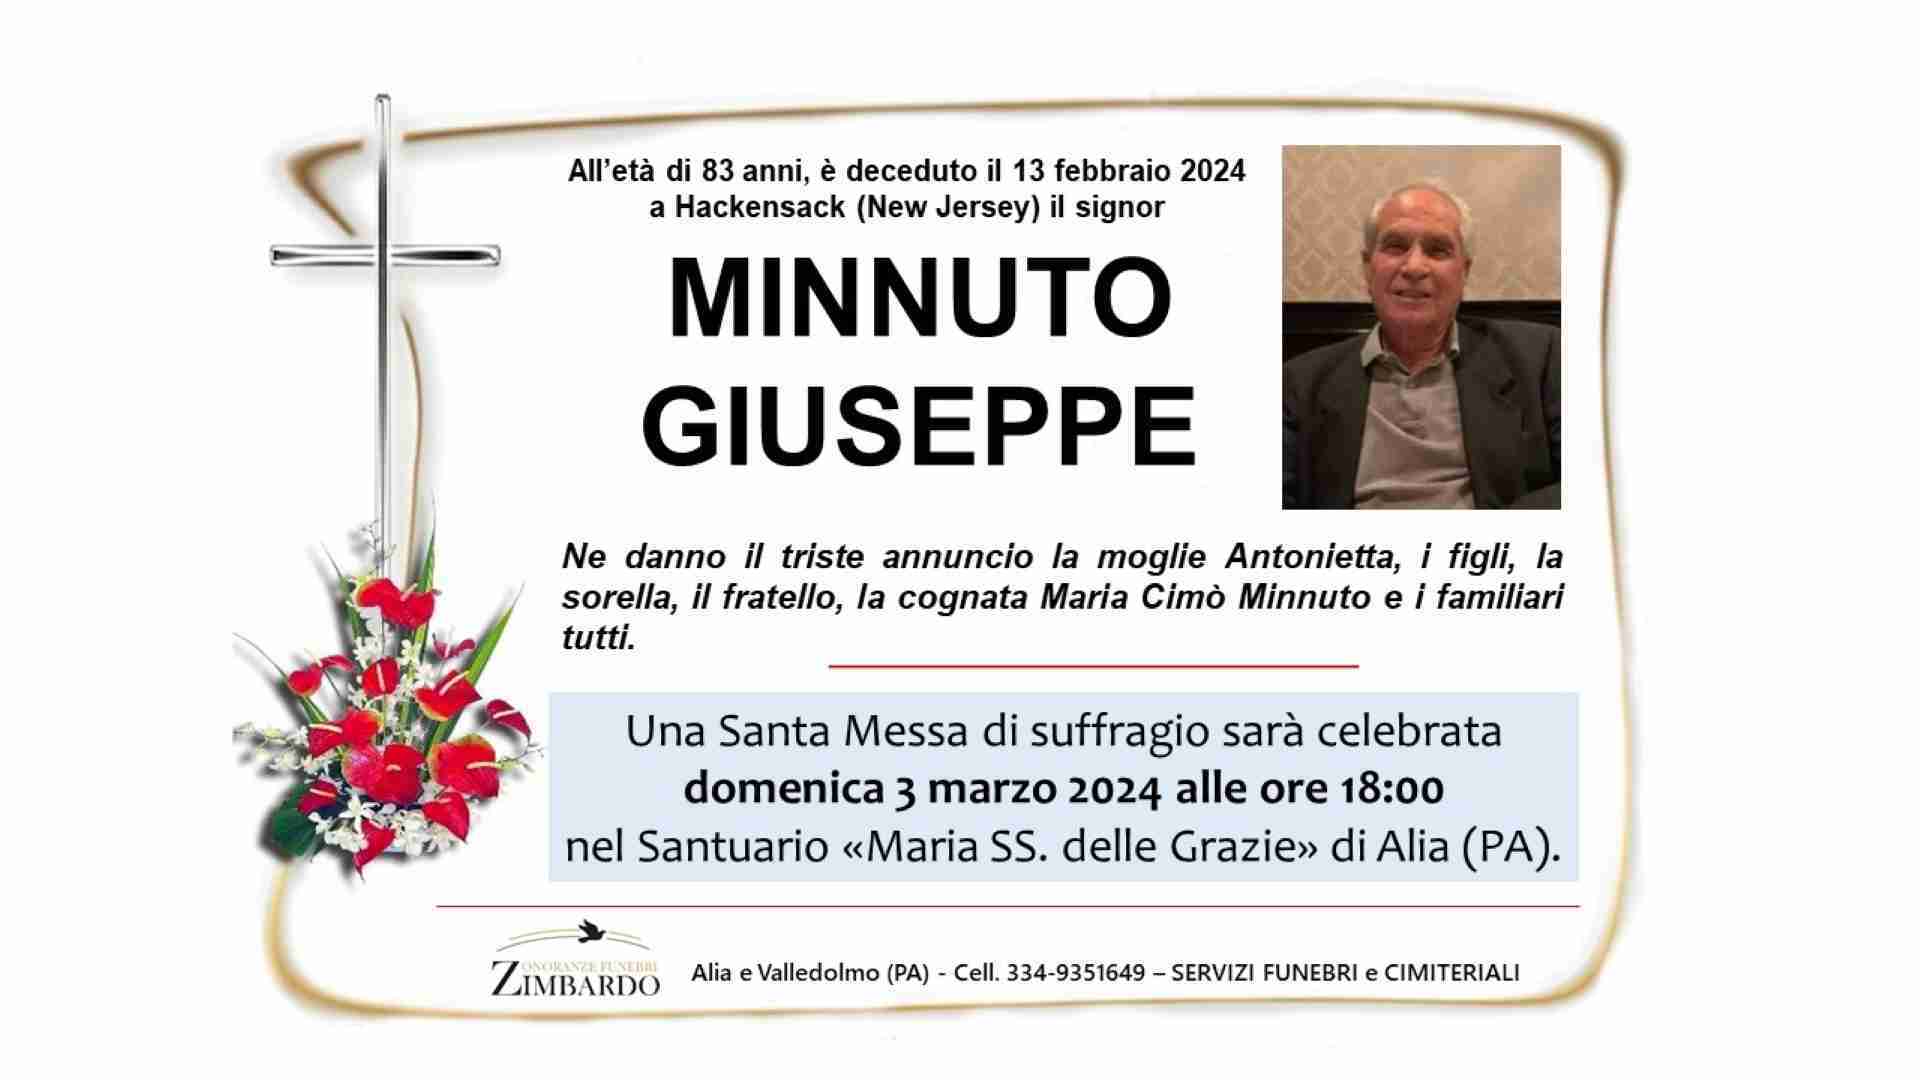 Giuseppe Minnuto